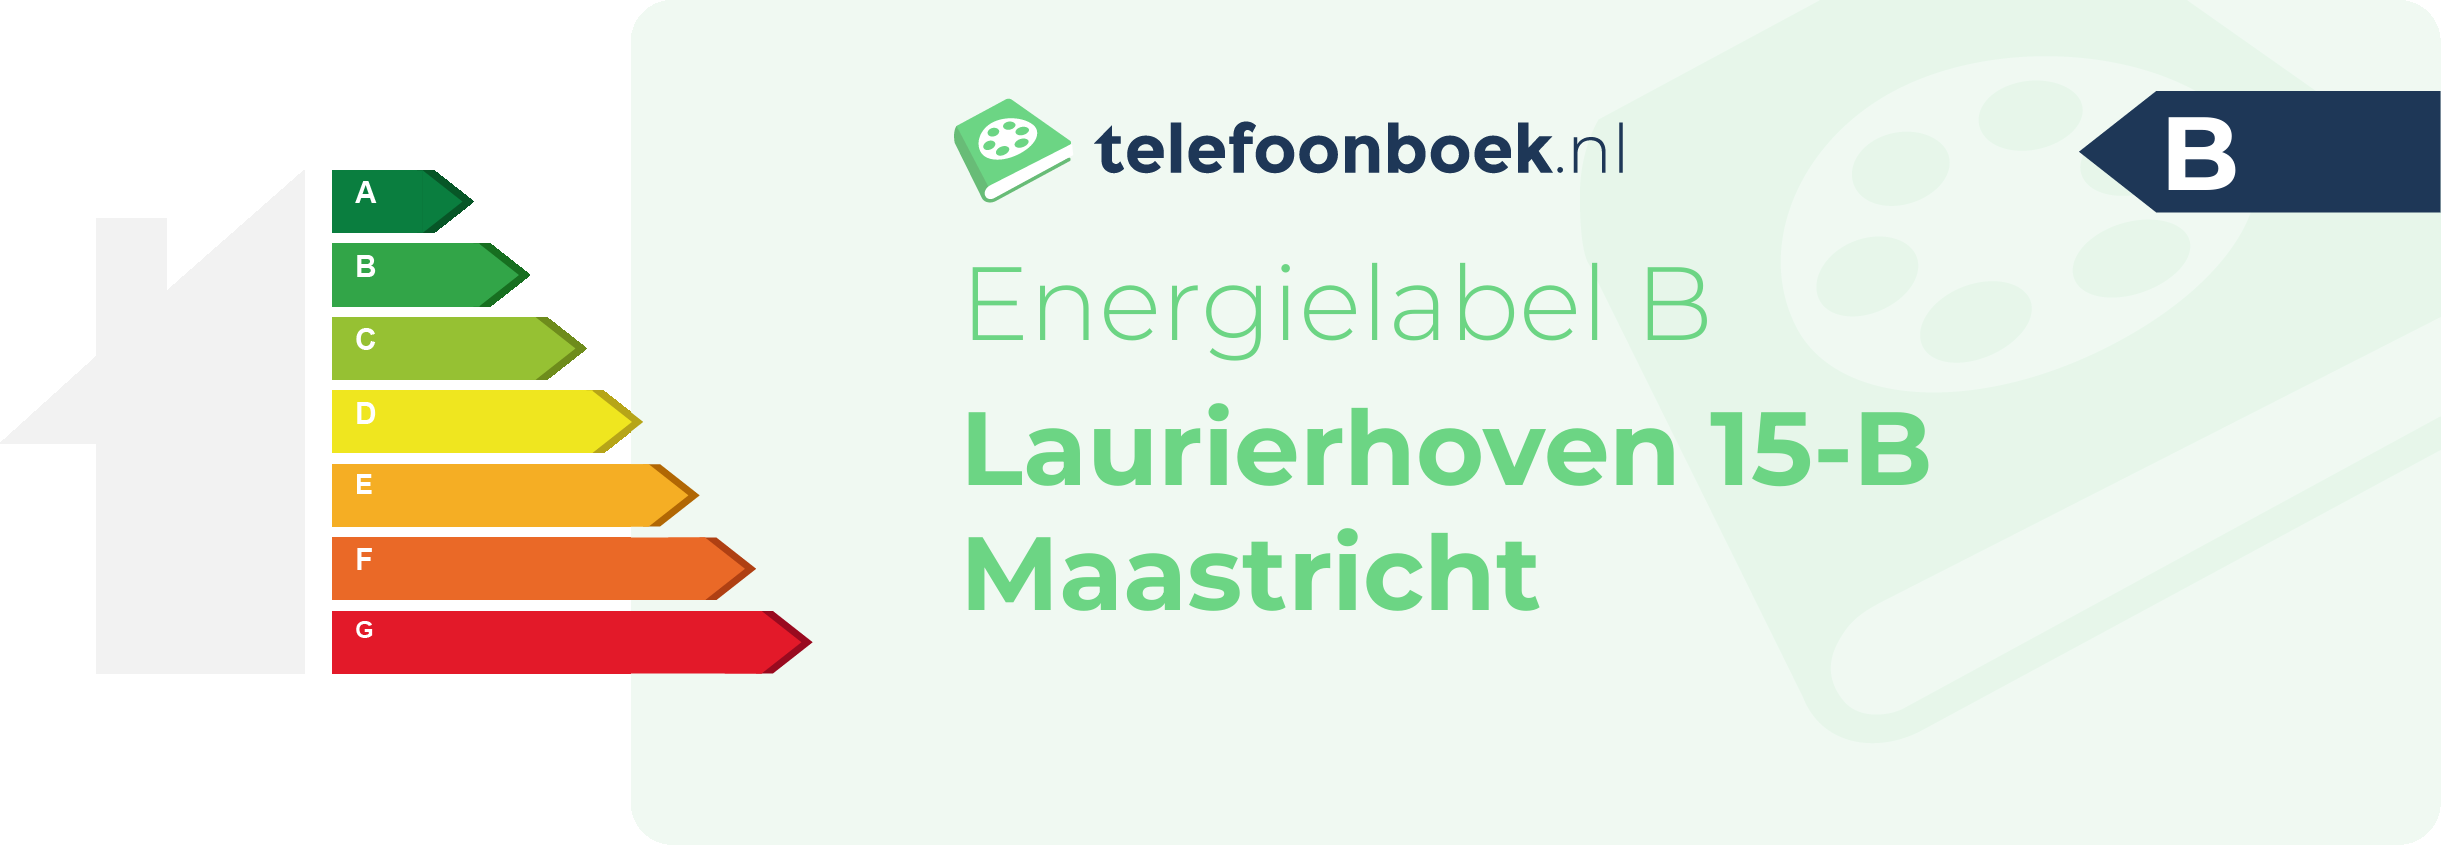 Energielabel Laurierhoven 15-B Maastricht